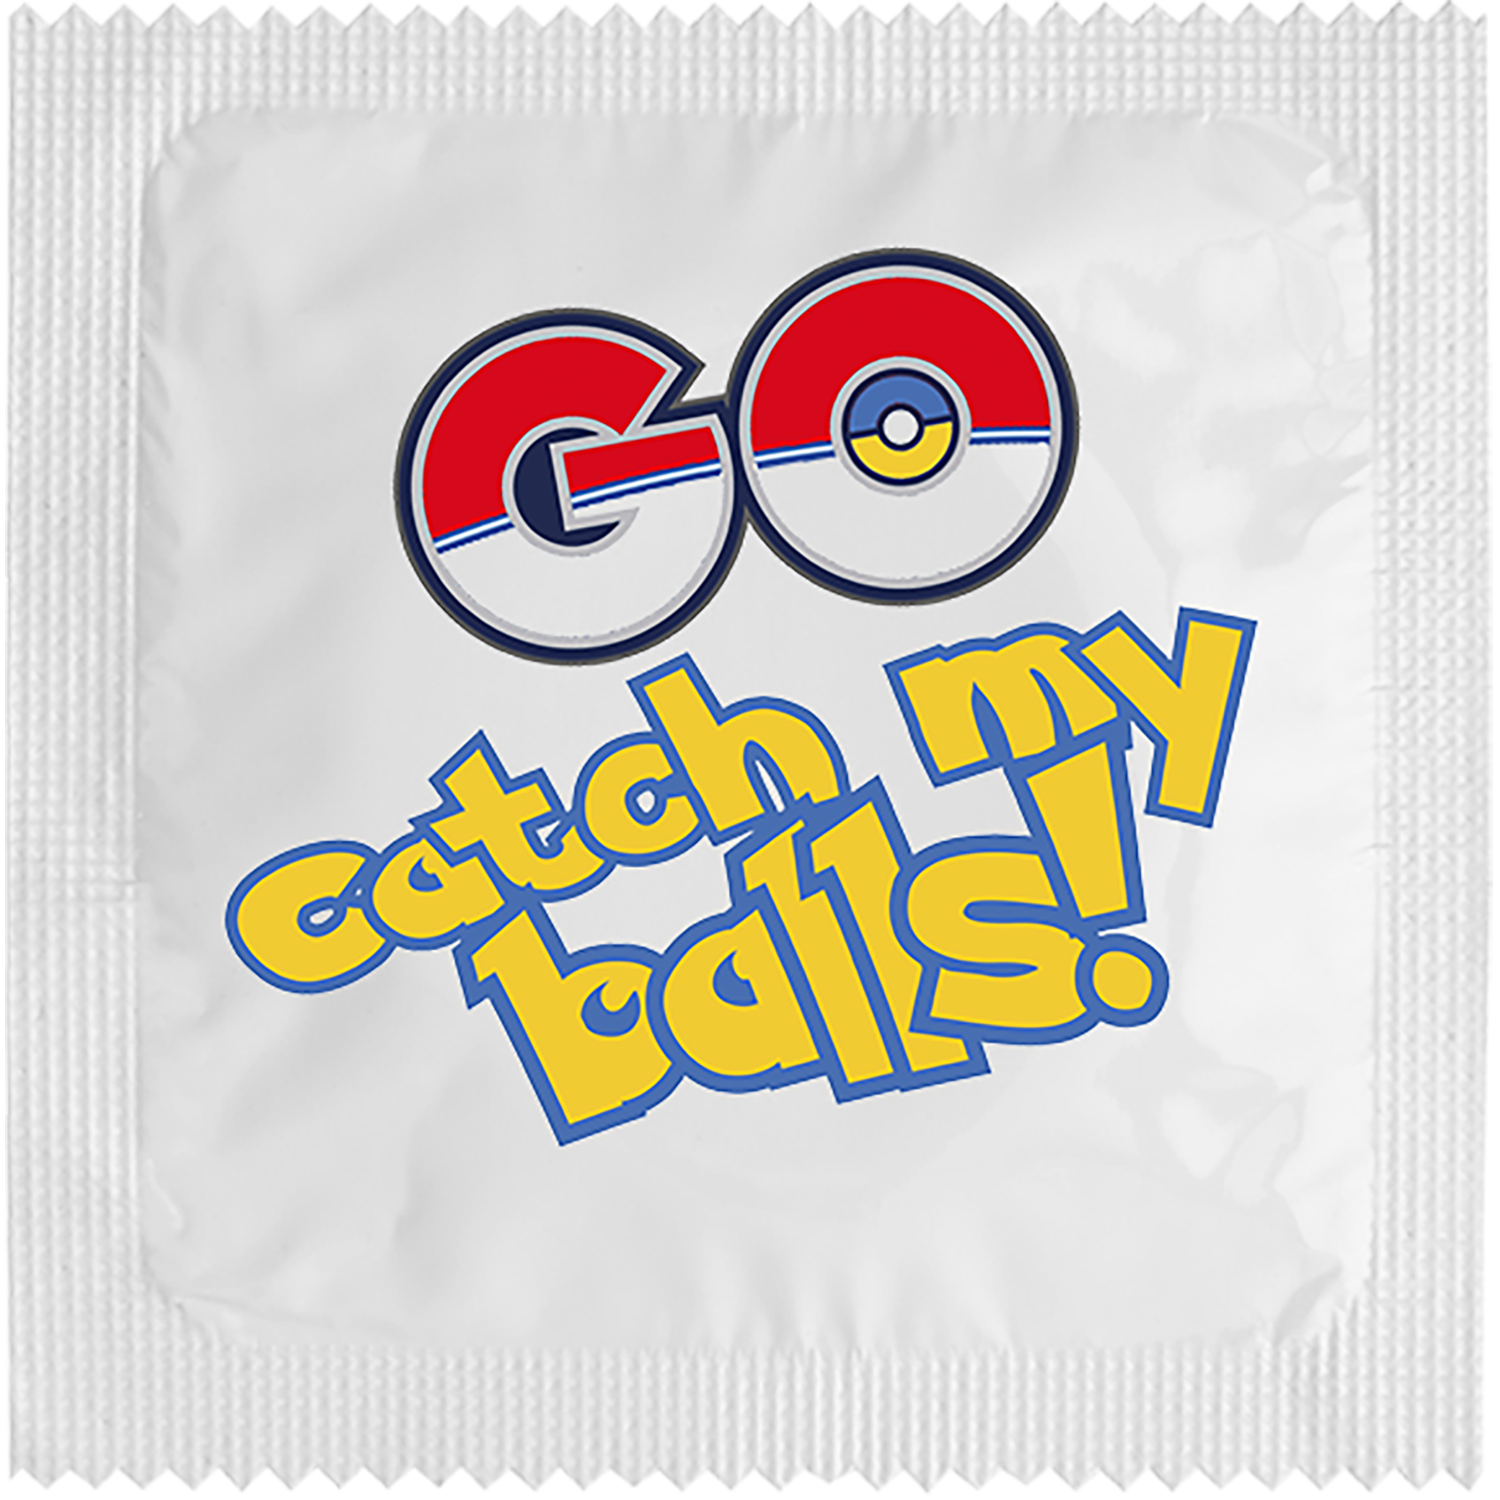 Image of funny condom "Catch My Balls"